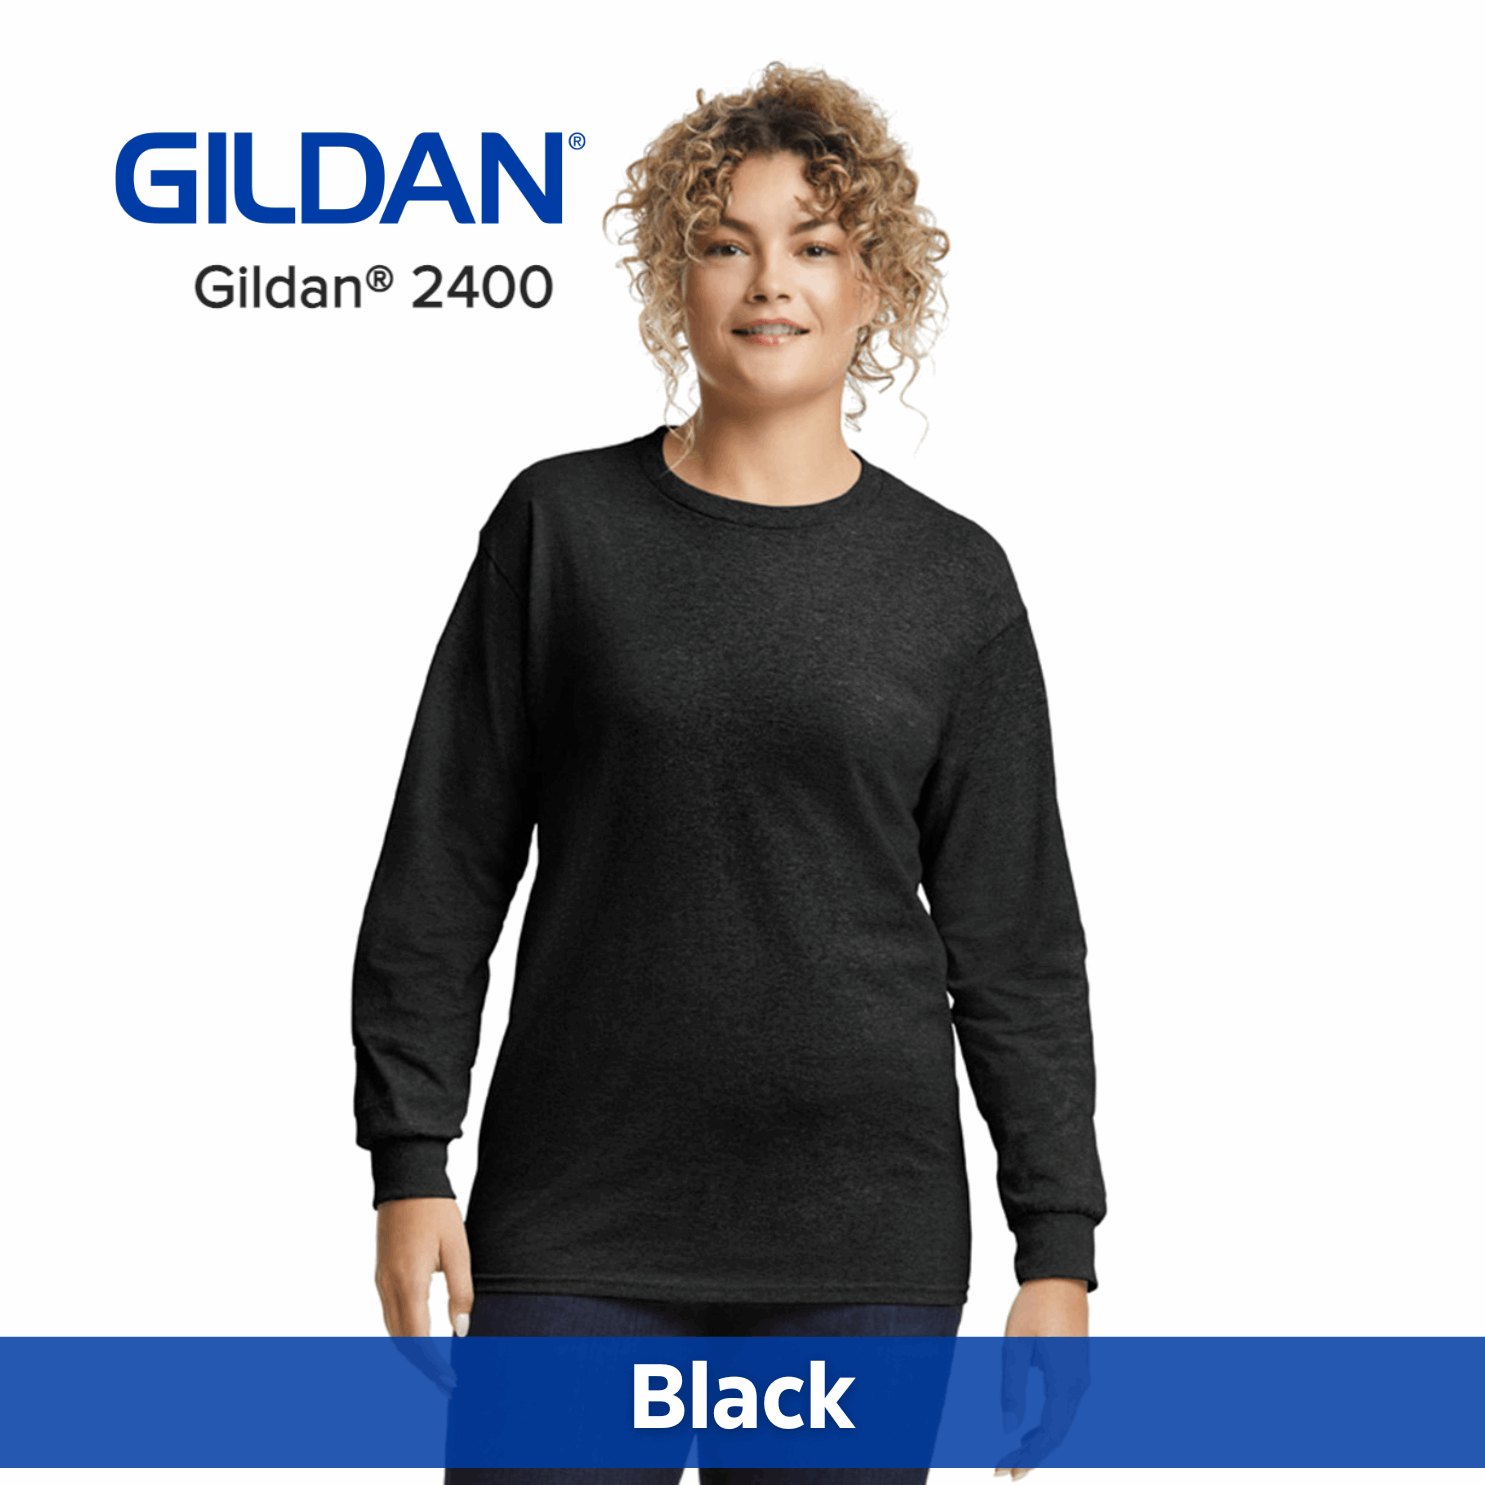 One Color Imprint Front & Back Gildan® 2400 Long Sleeve T-Shirt 100% Cotton Multiple Colors Available